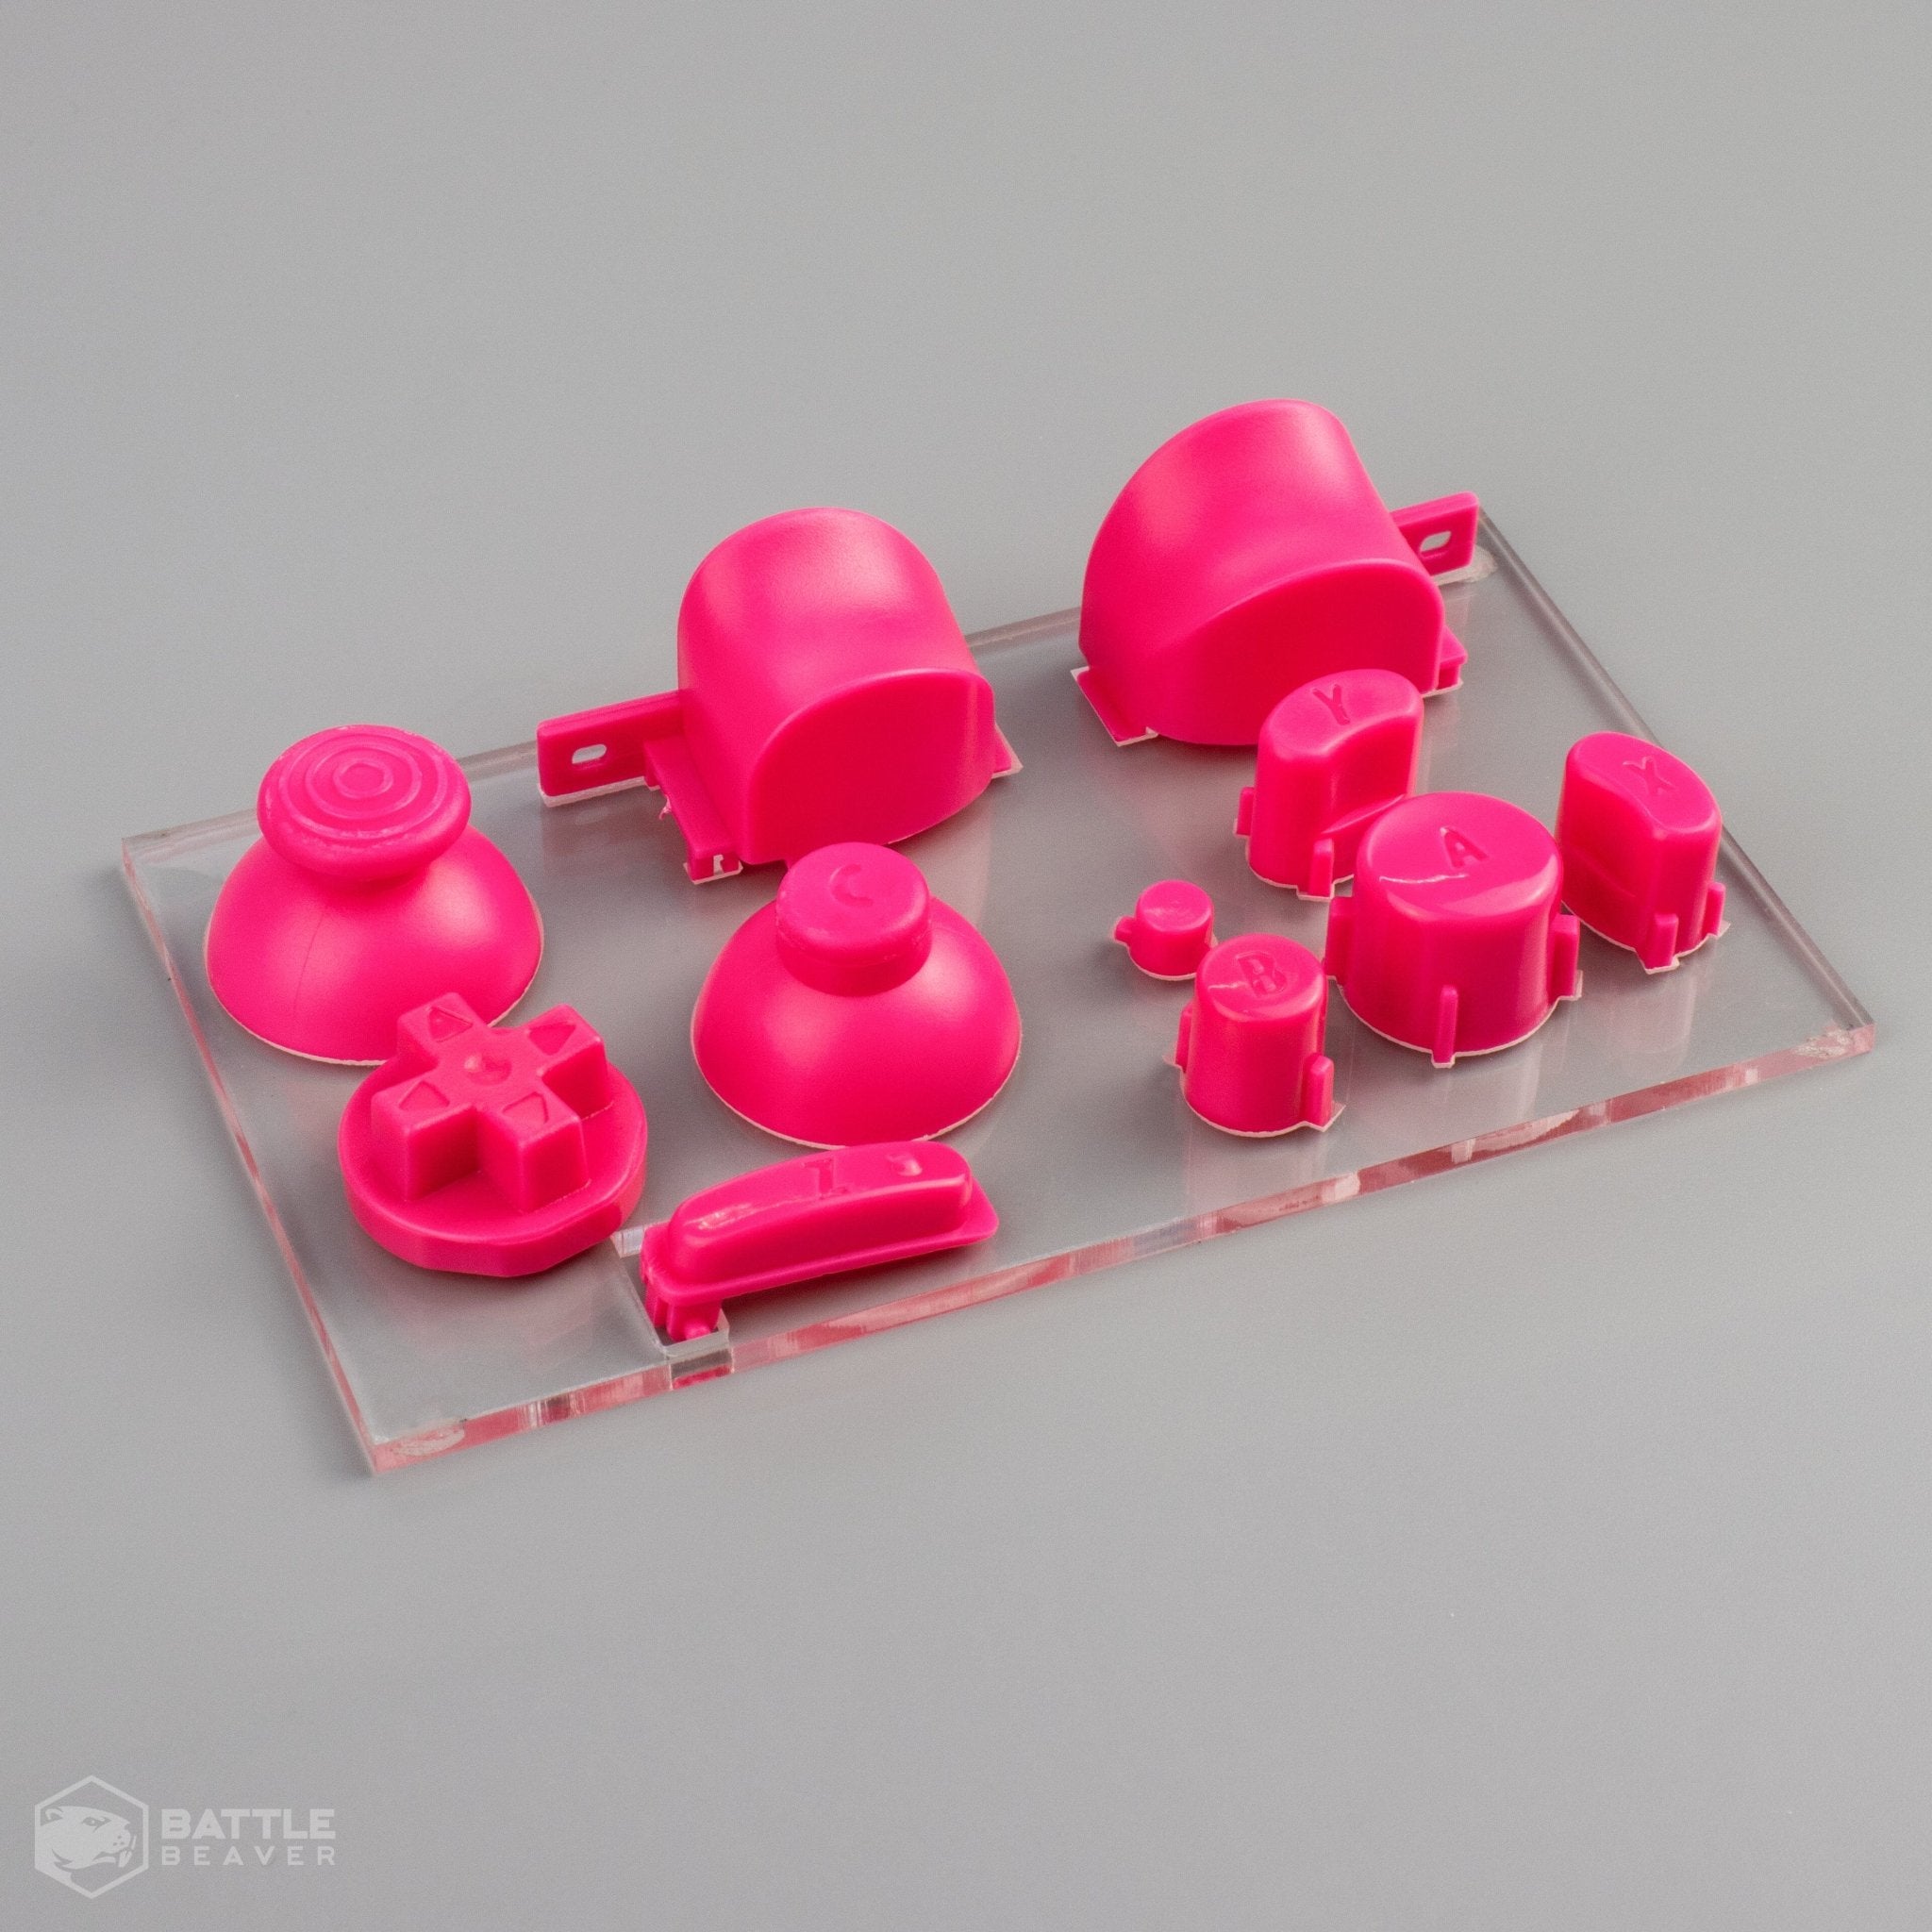 3rd Party Gamecube Parts Kit - Battle Beaver Customs - Pink